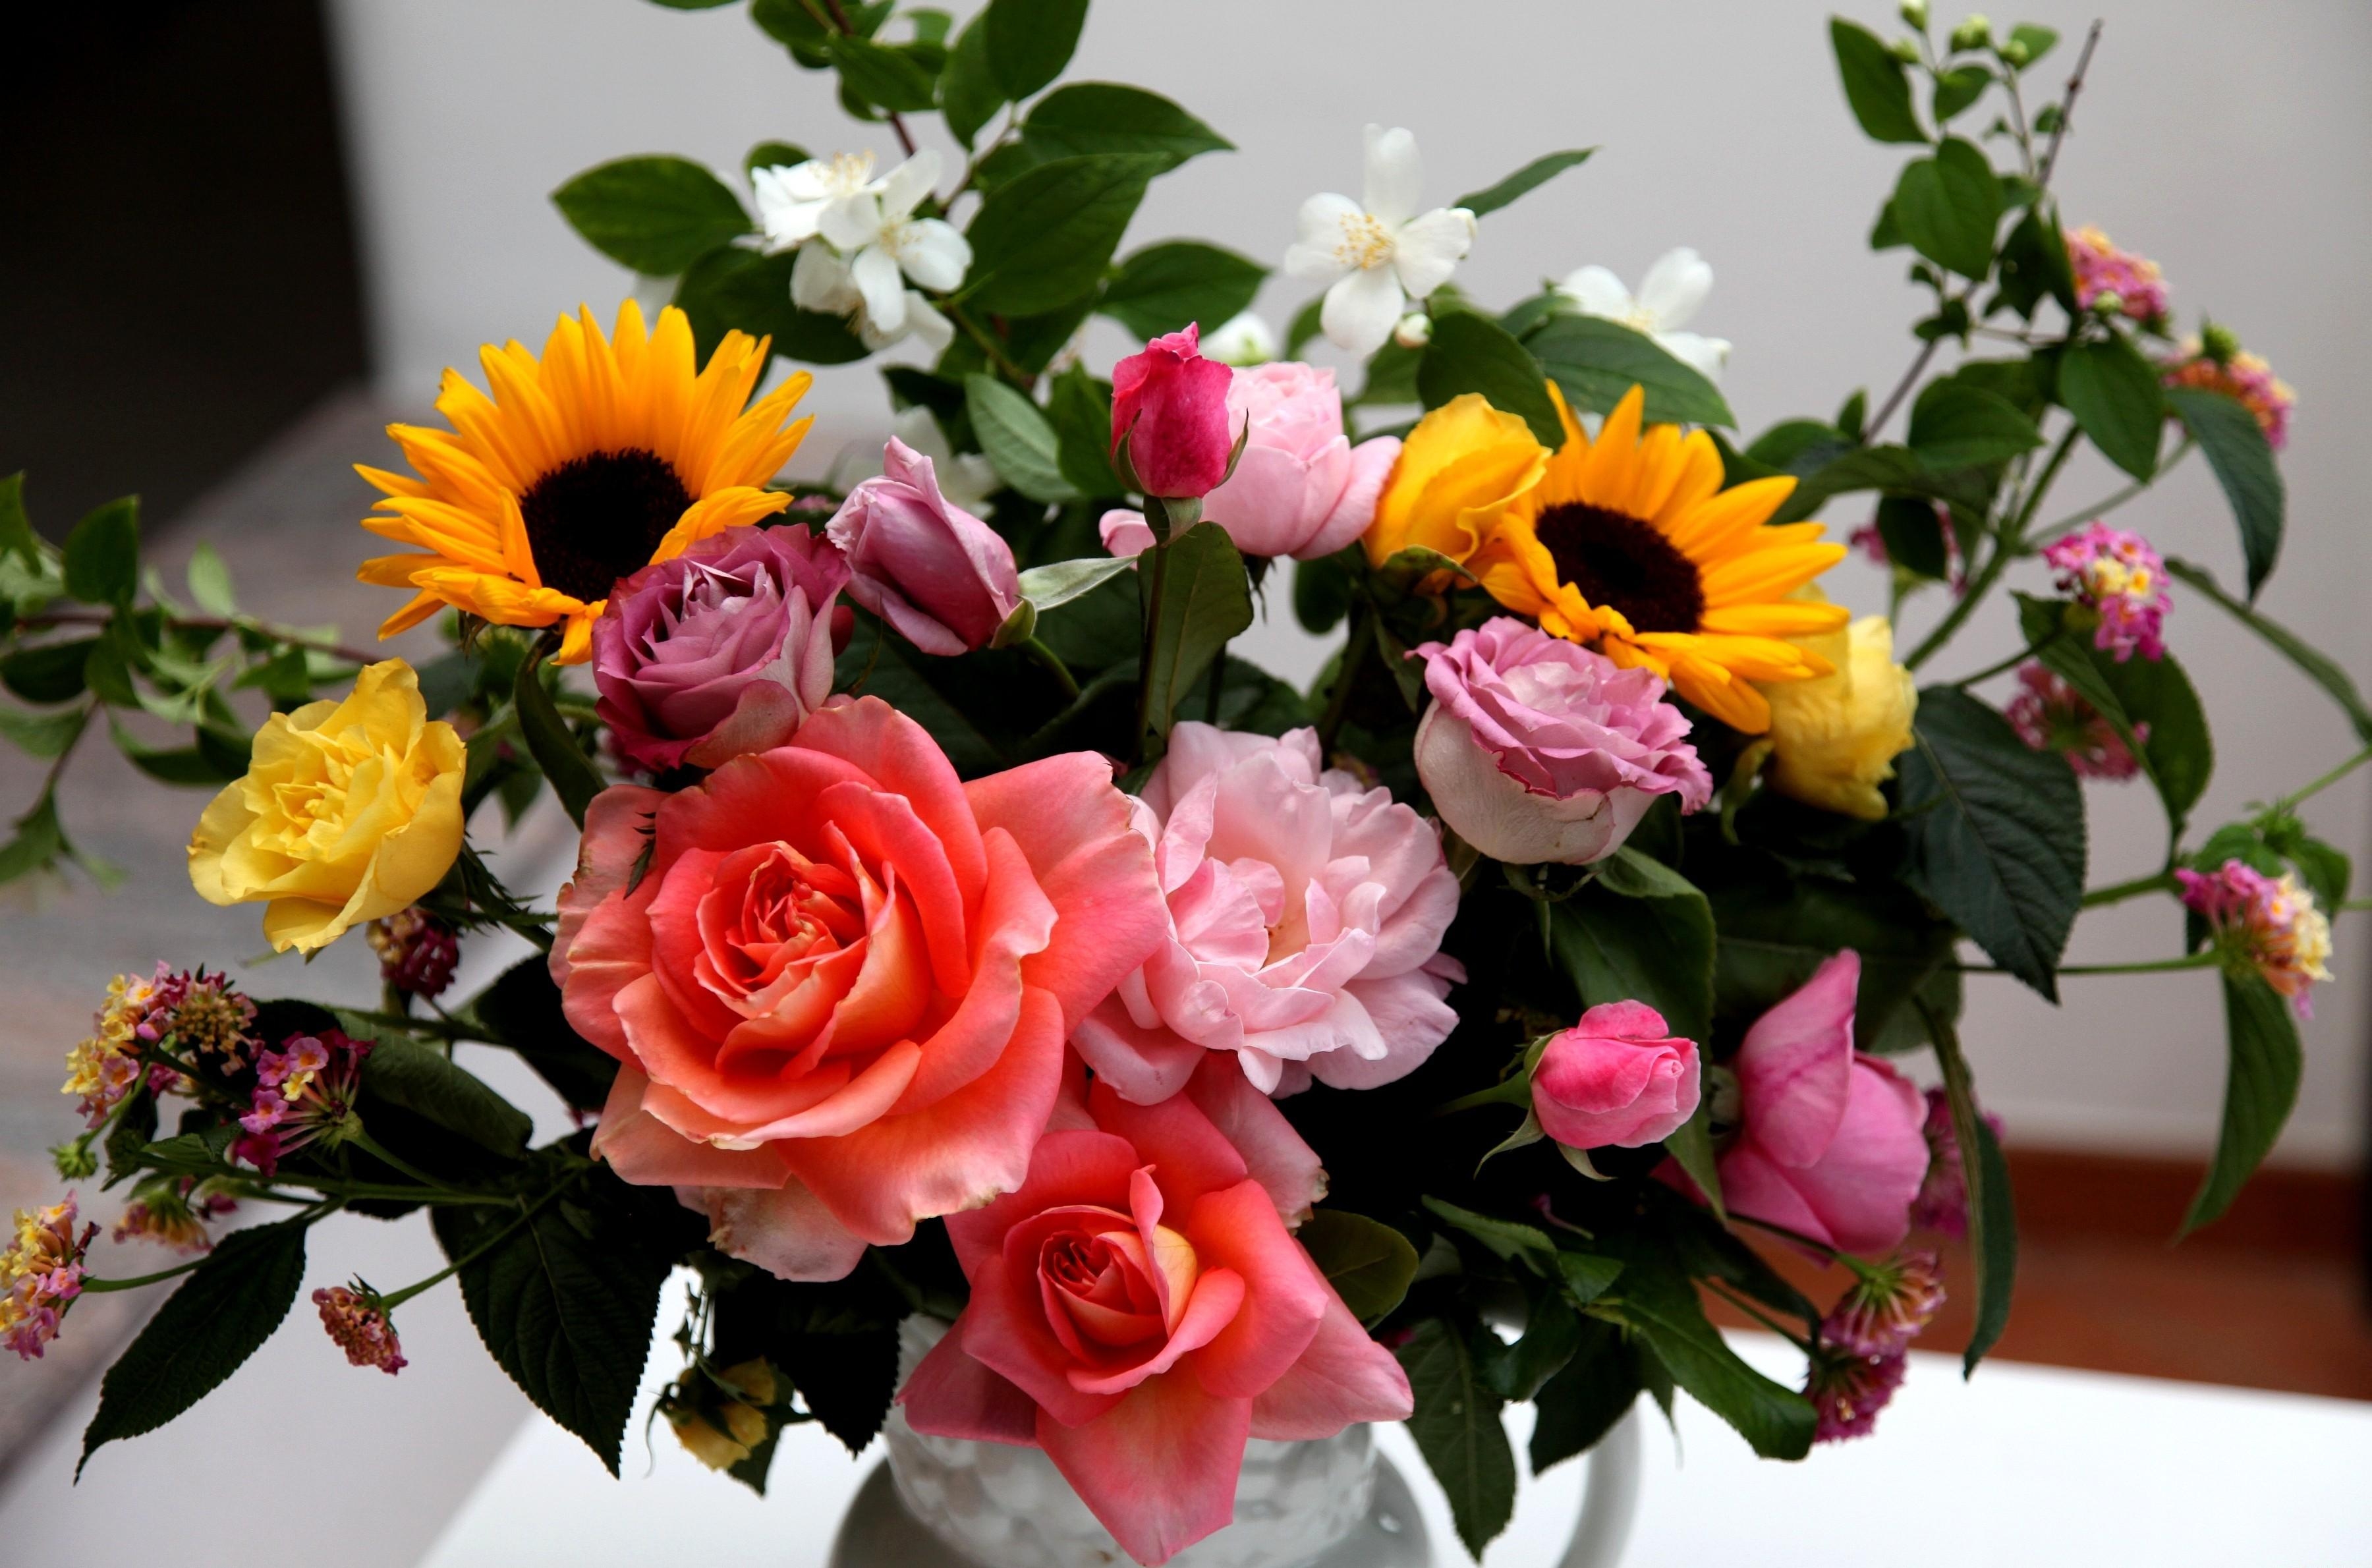 sunflowers, flowers, roses, bouquet, vase, composition, jasmine iphone wallpaper